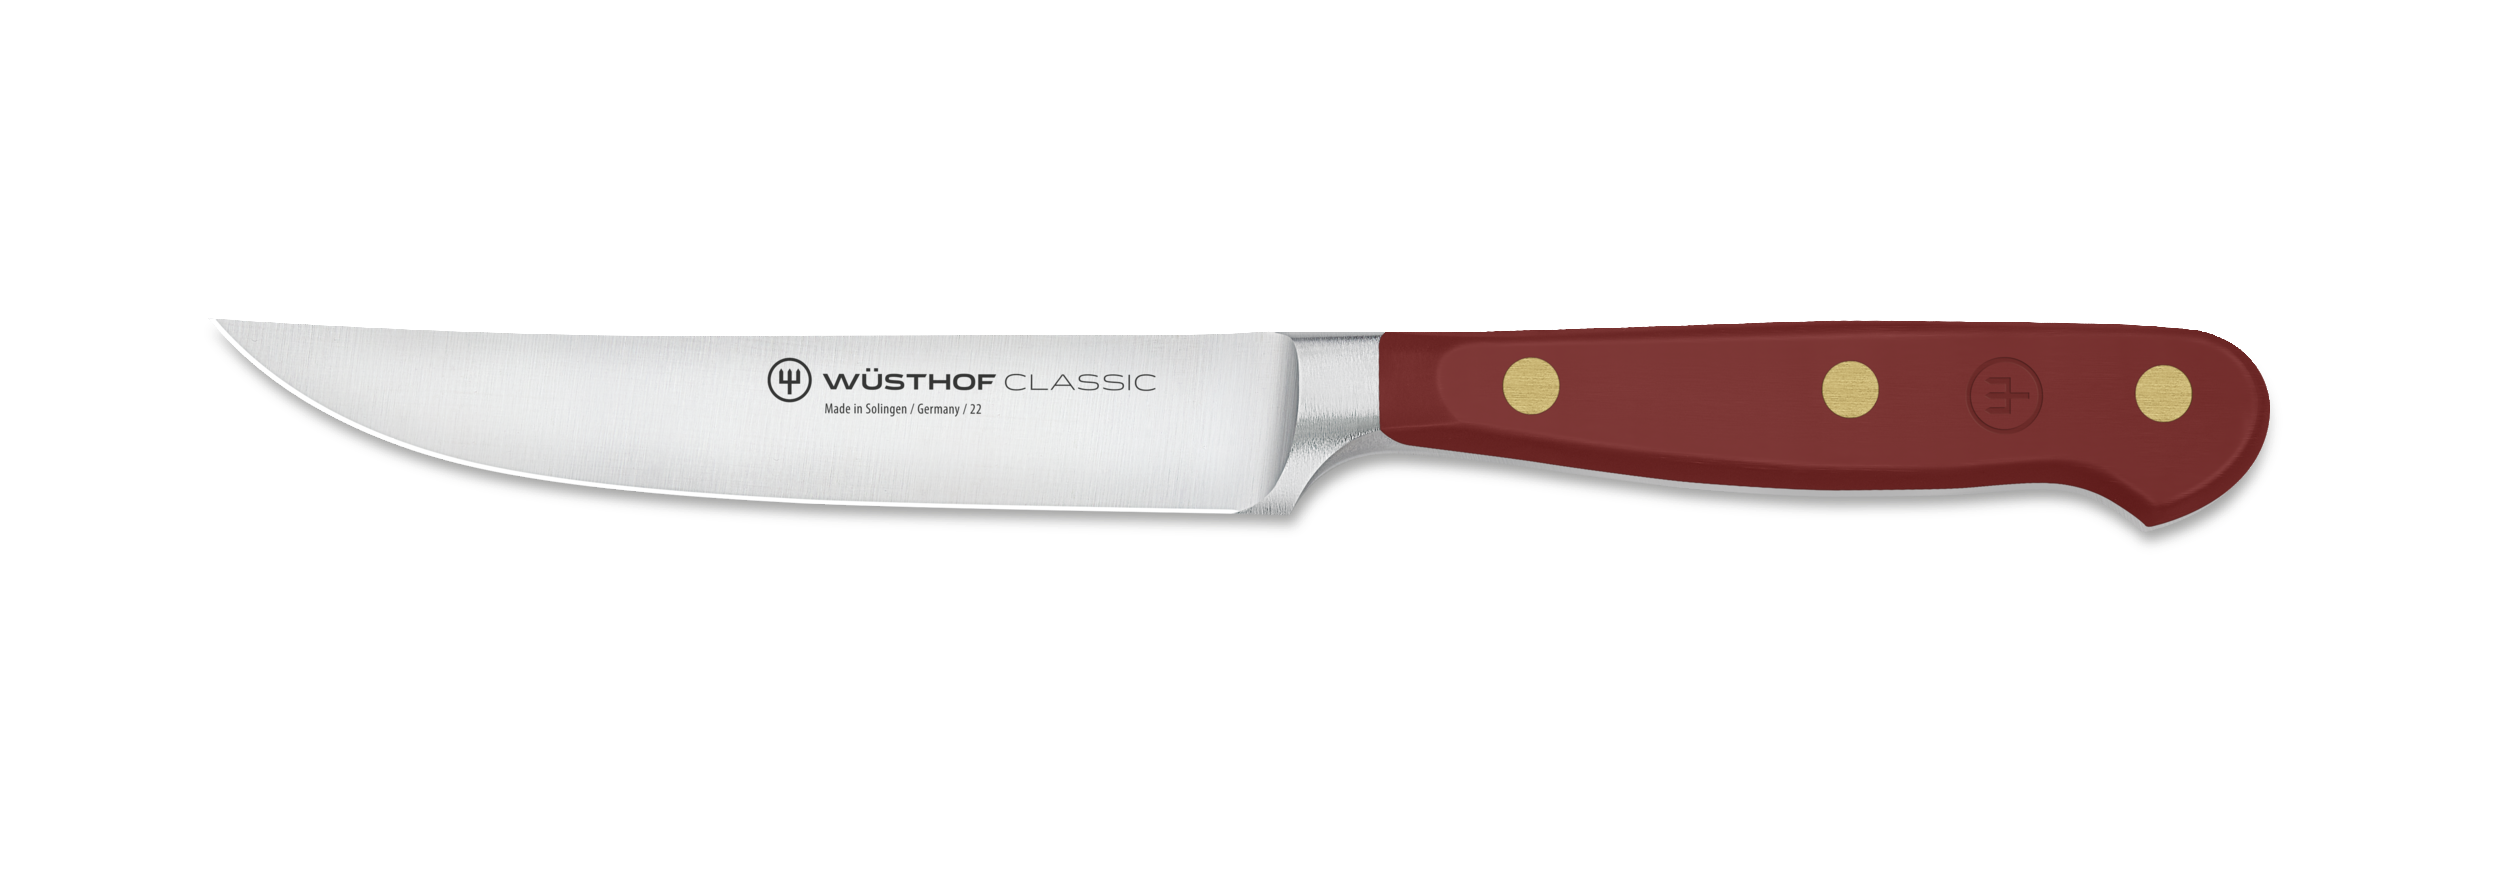 Wüsthof Classic Knife block set